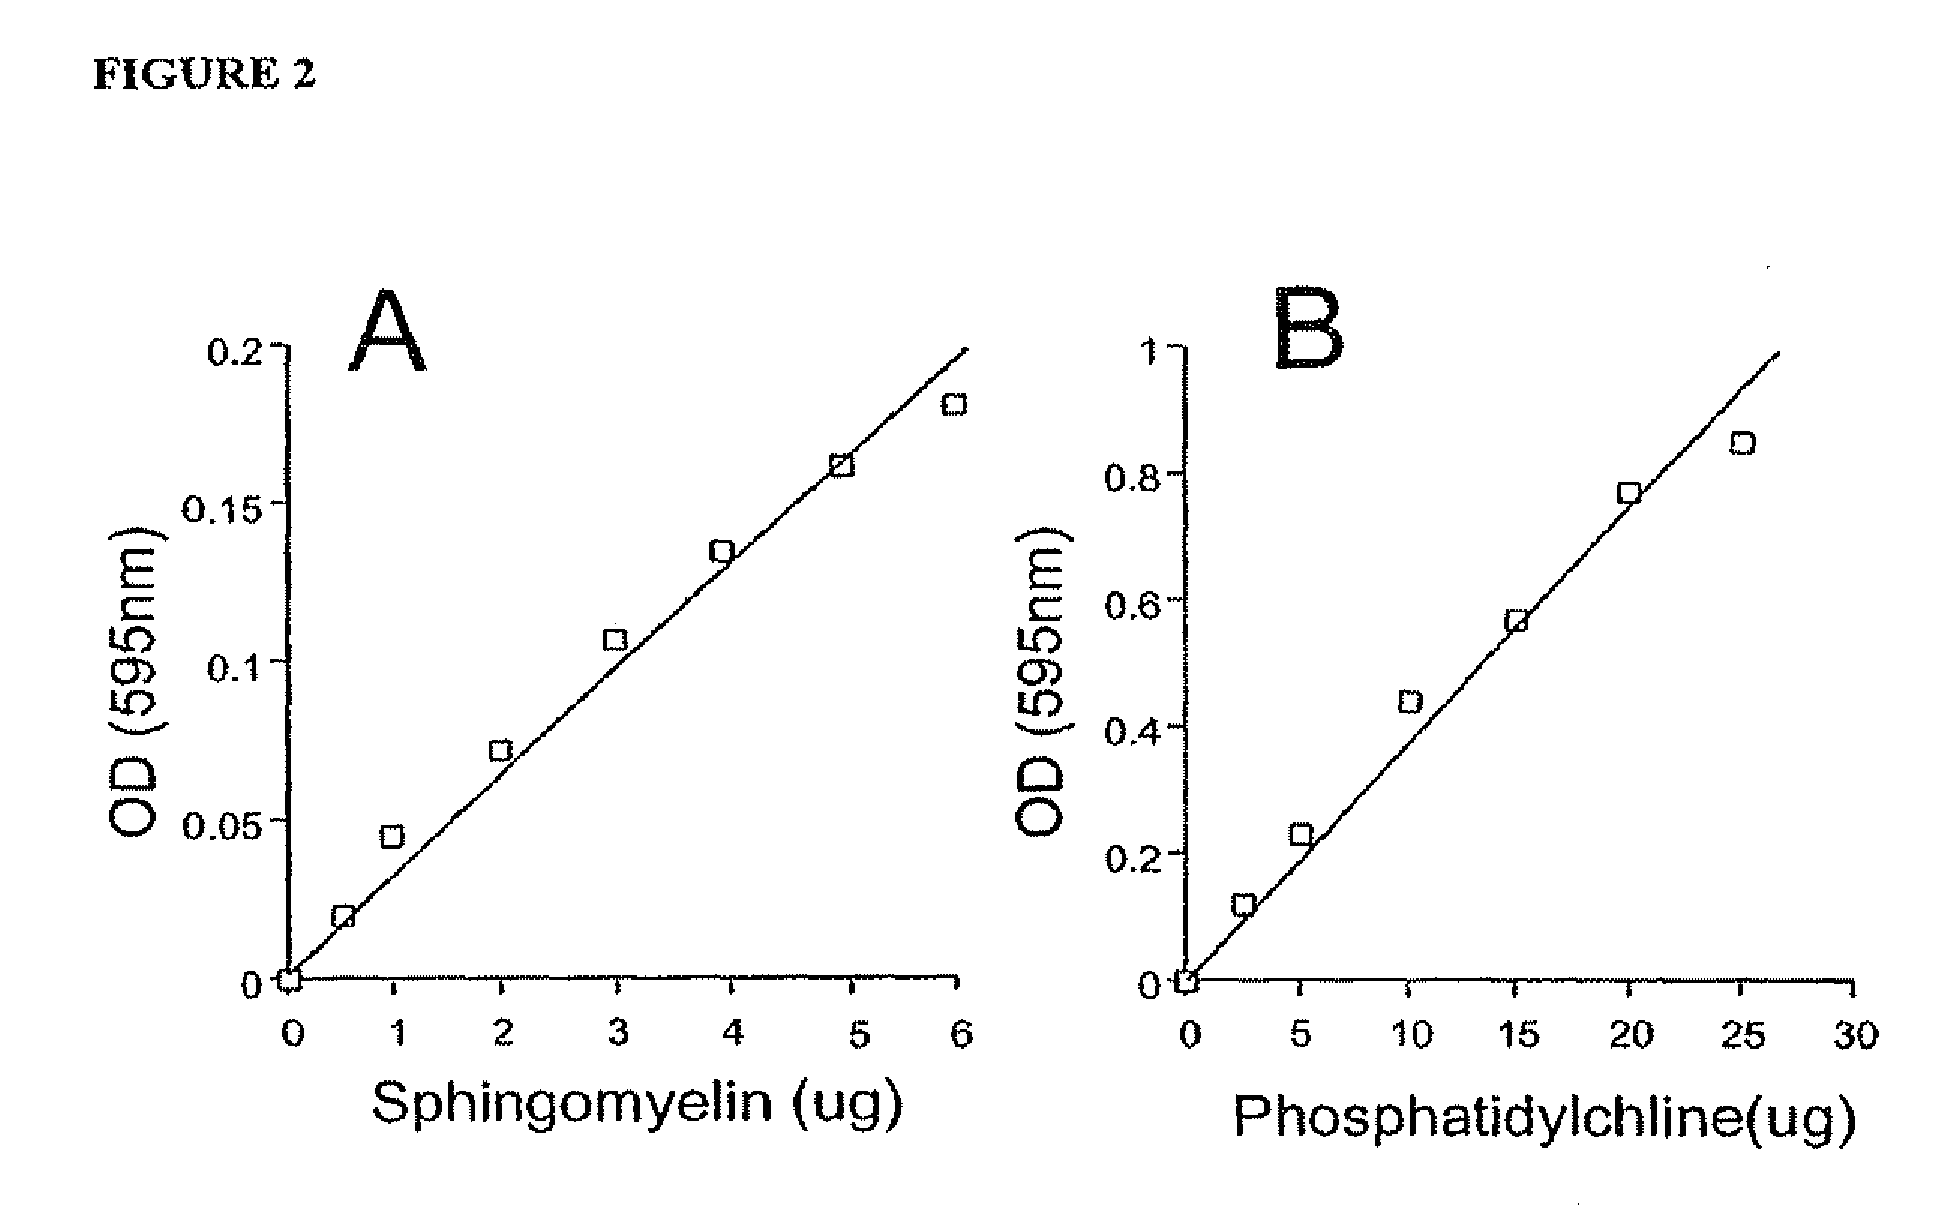 Enzymatic methods for measuring plasma and tissue sphingomylelin and phosphatidylcholine